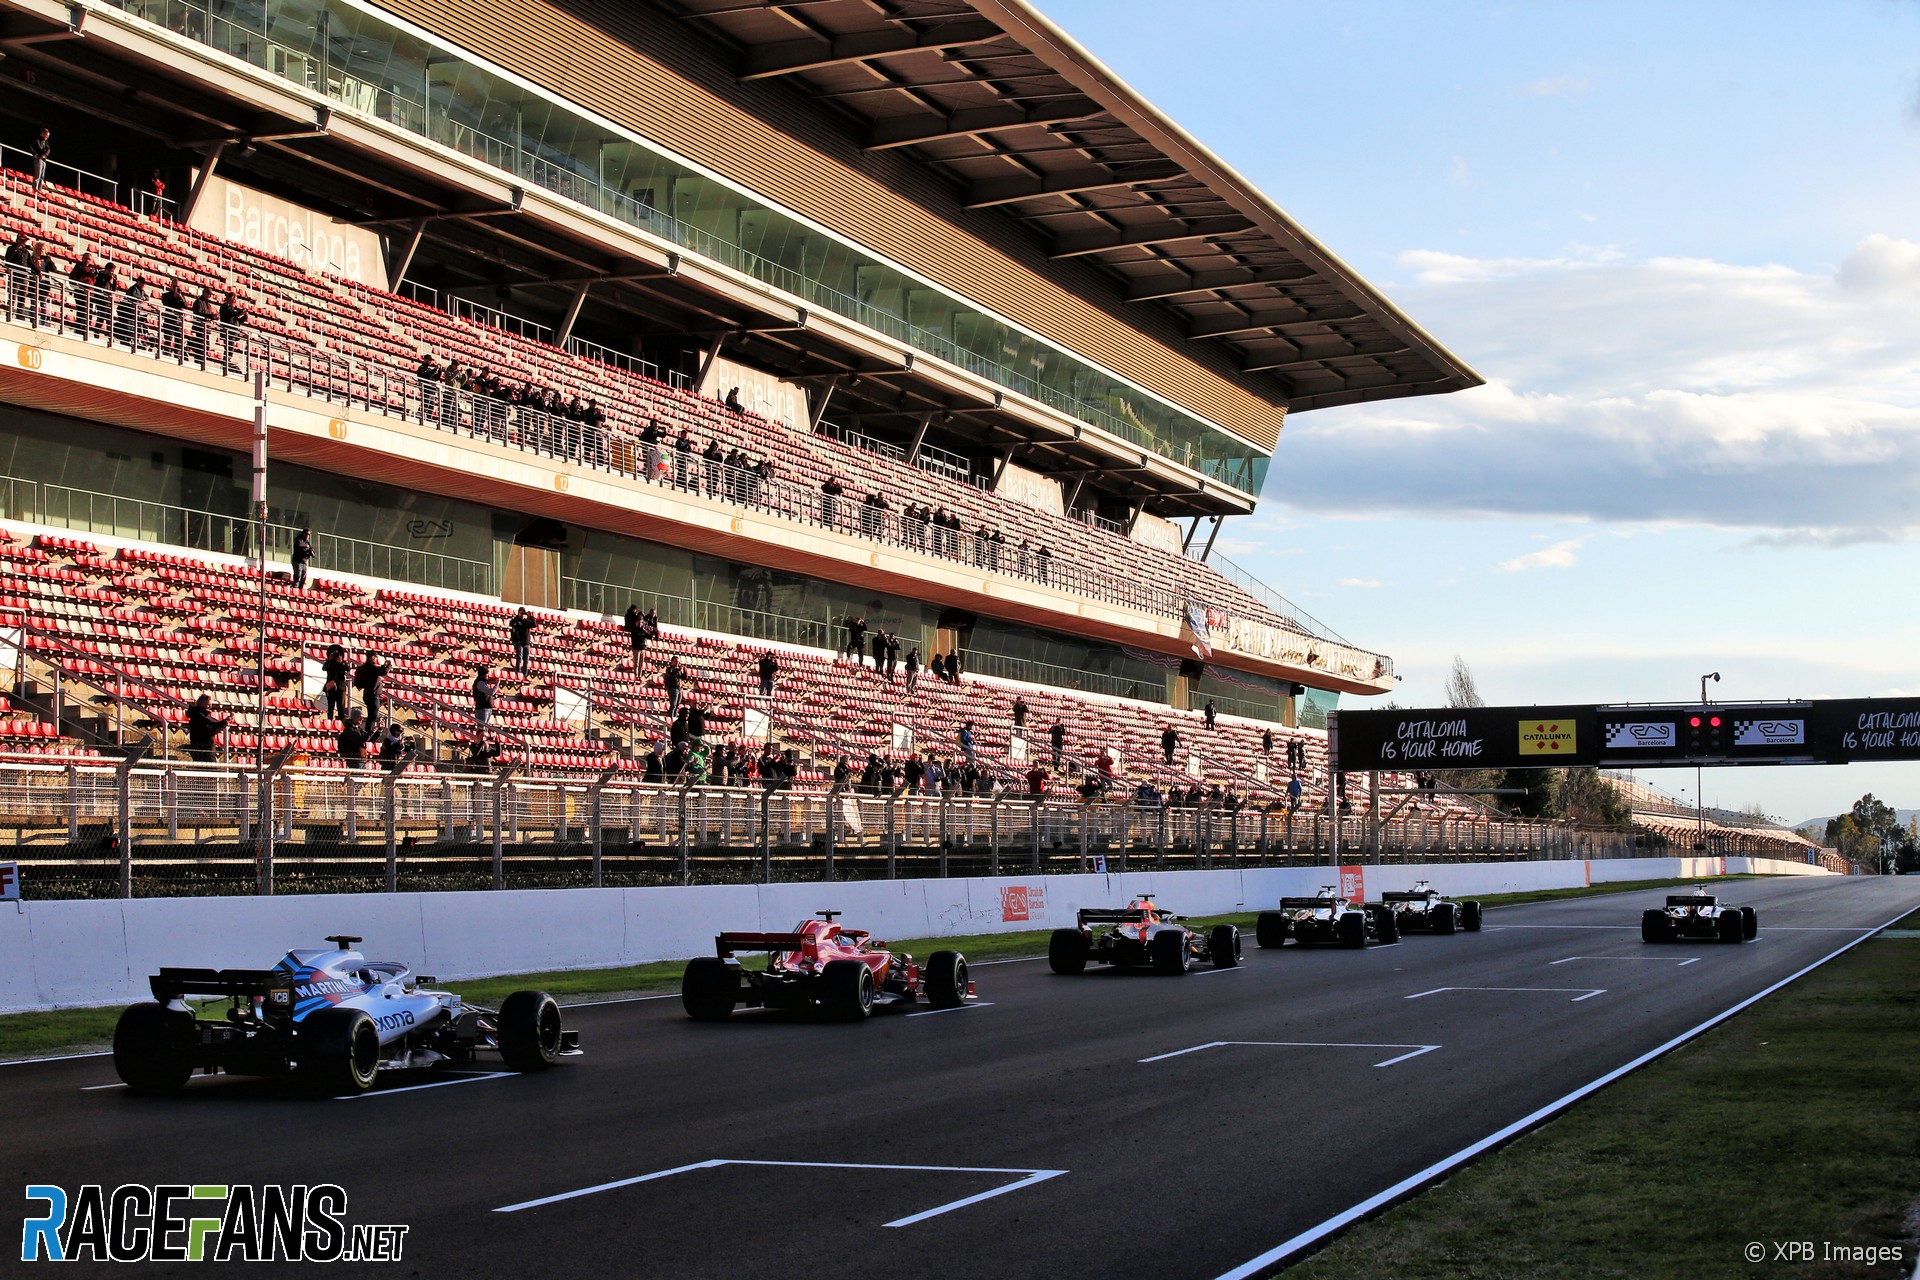 Cars on the grid, Circuit de Catalunya, 2018